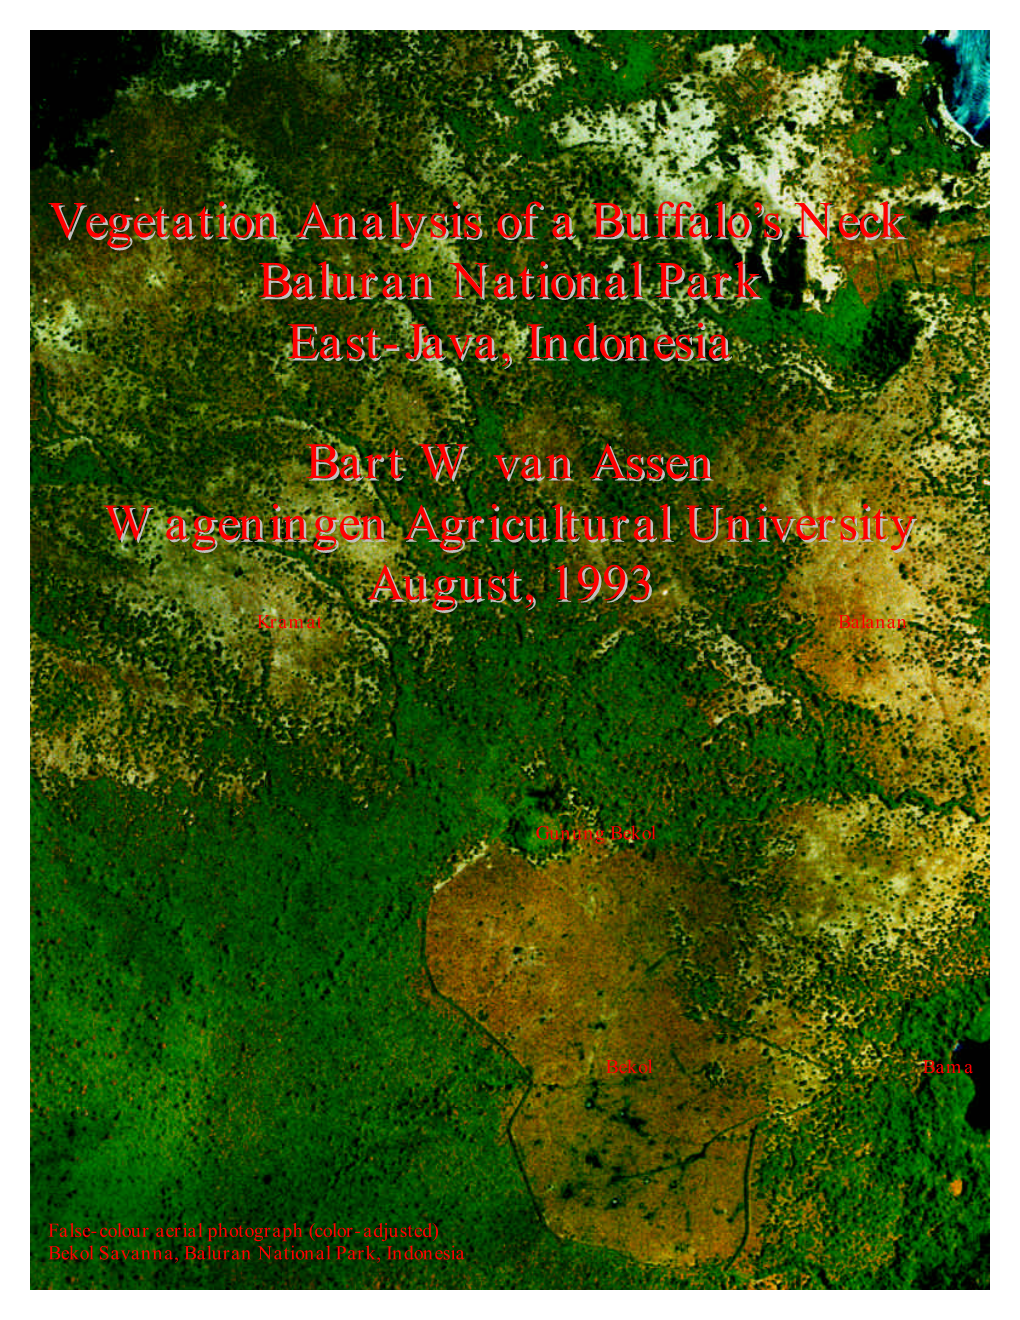 Vegetation Analysis of a Buffalo's Neck Baluran National Park East